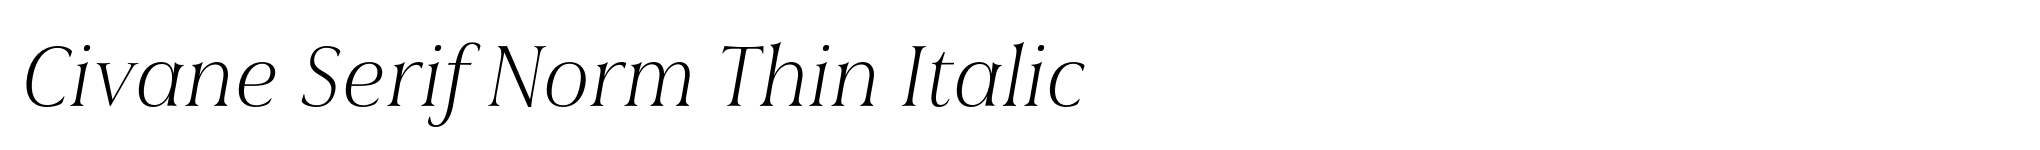 Civane Serif Norm Thin Italic image